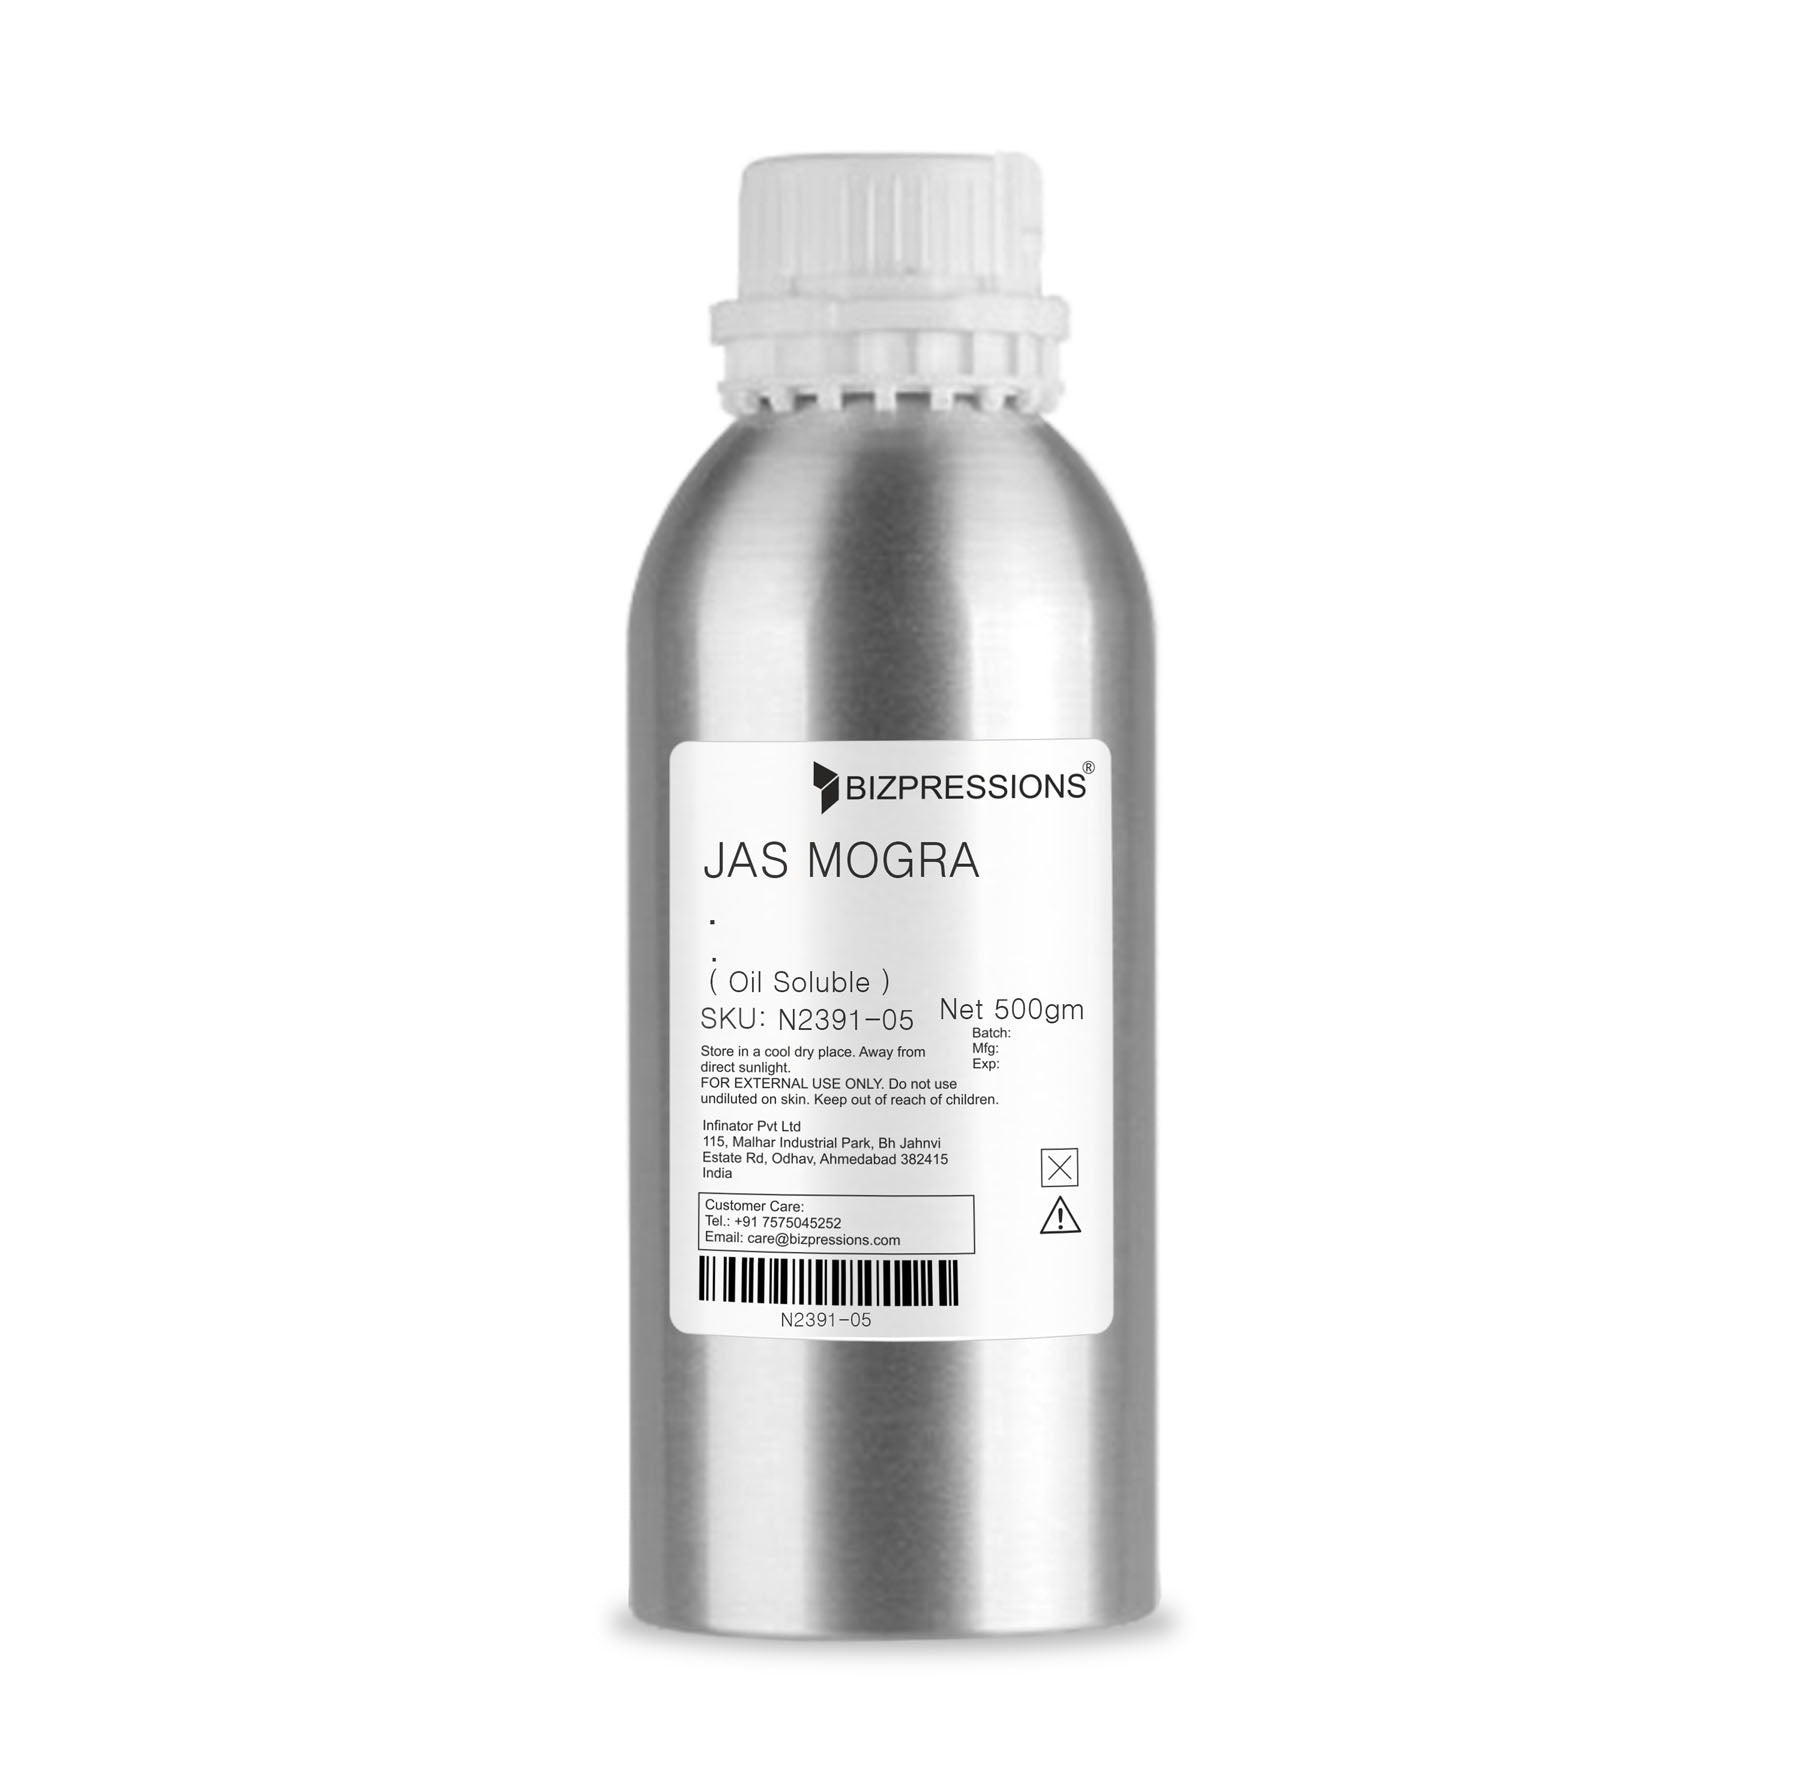 JAS MOGRA - Fragrance ( Oil Soluble ) - 500 gm